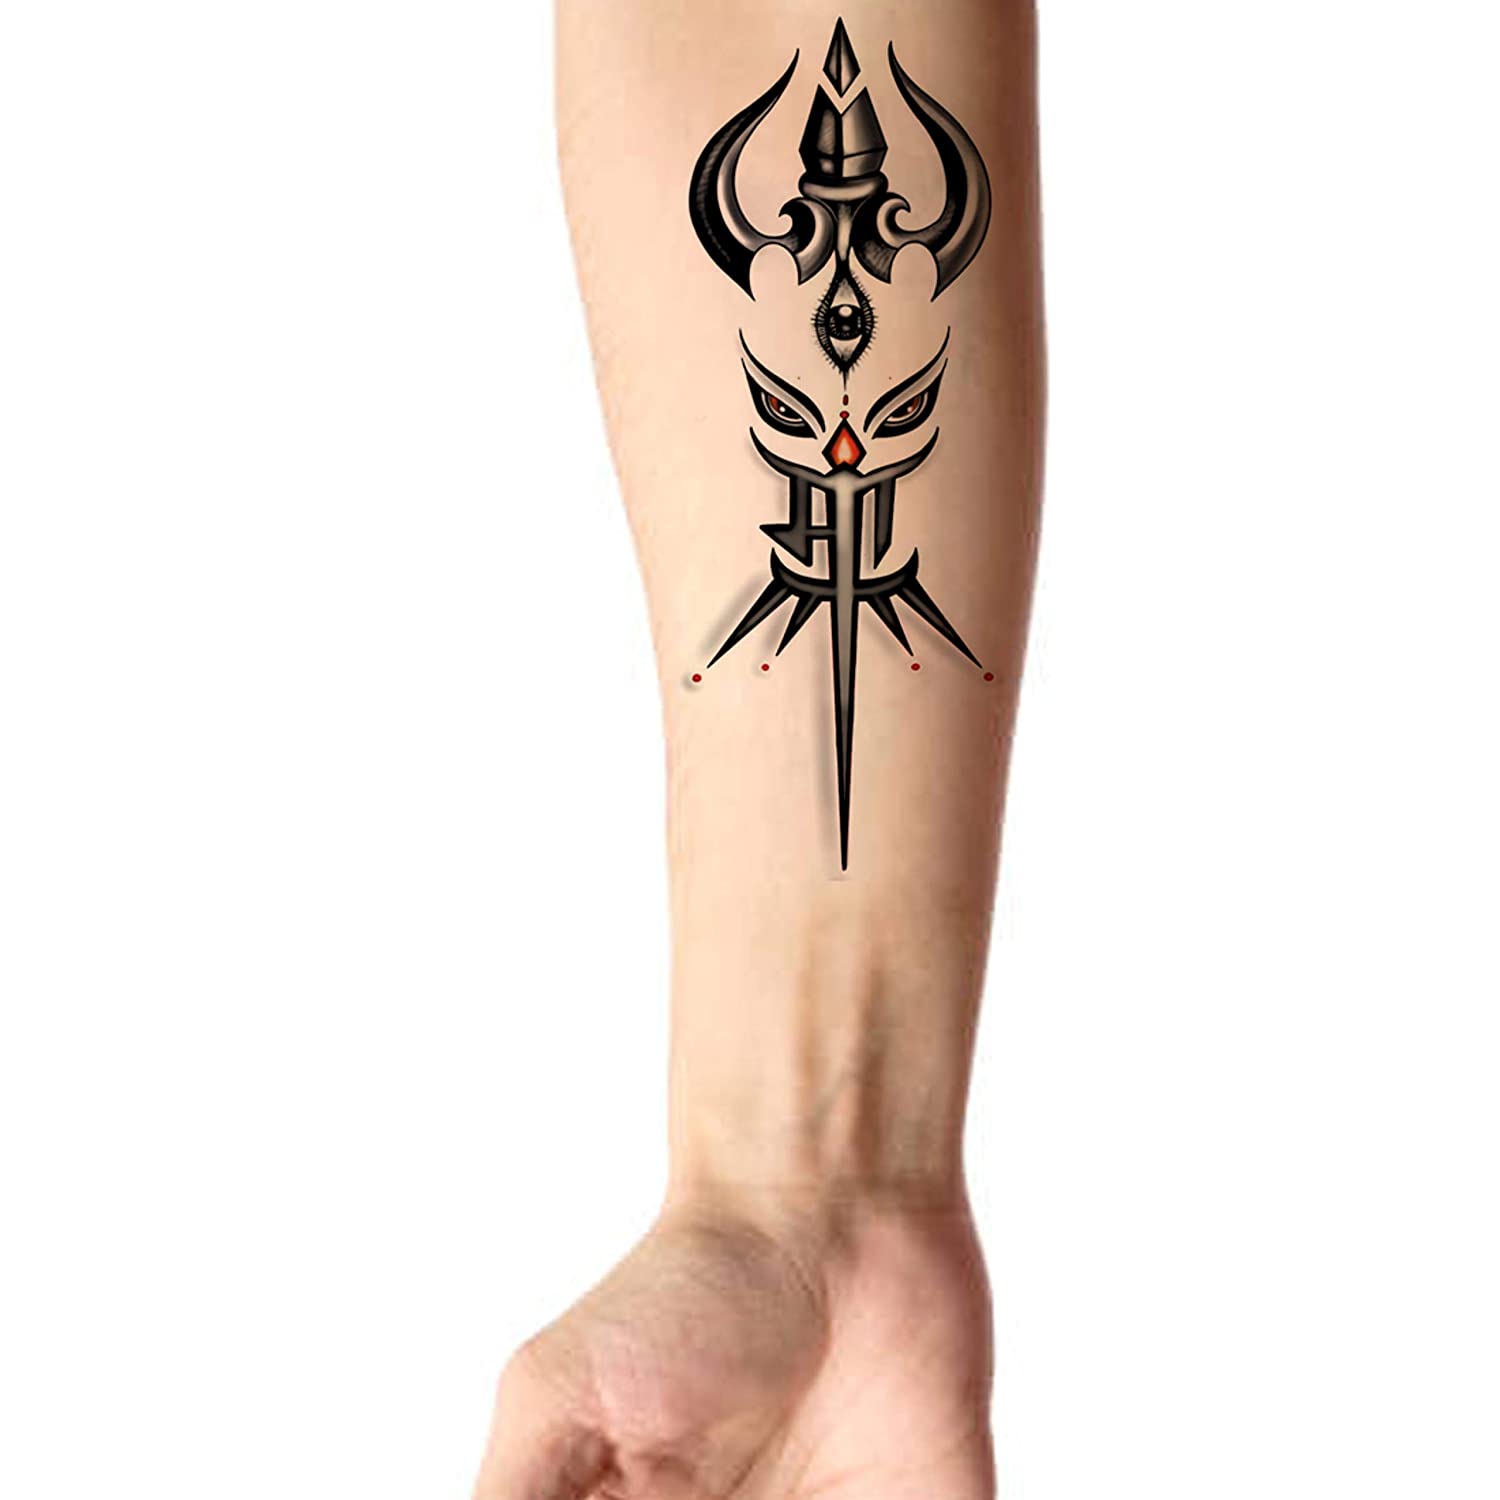 Share 80 about trishul maa paa tattoo best  indaotaonec